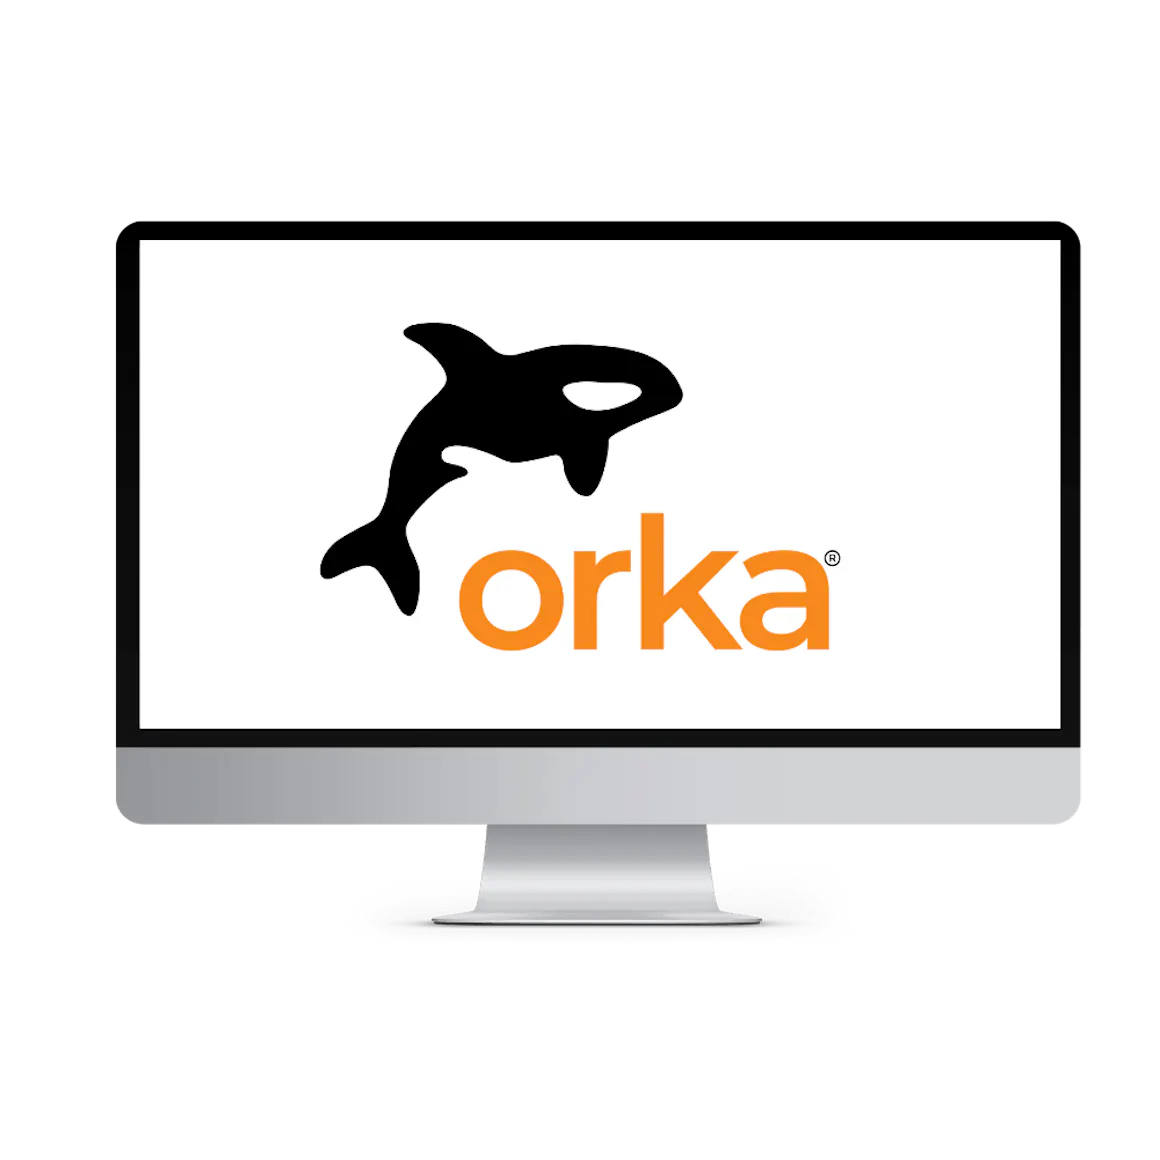 Orka logo on imac